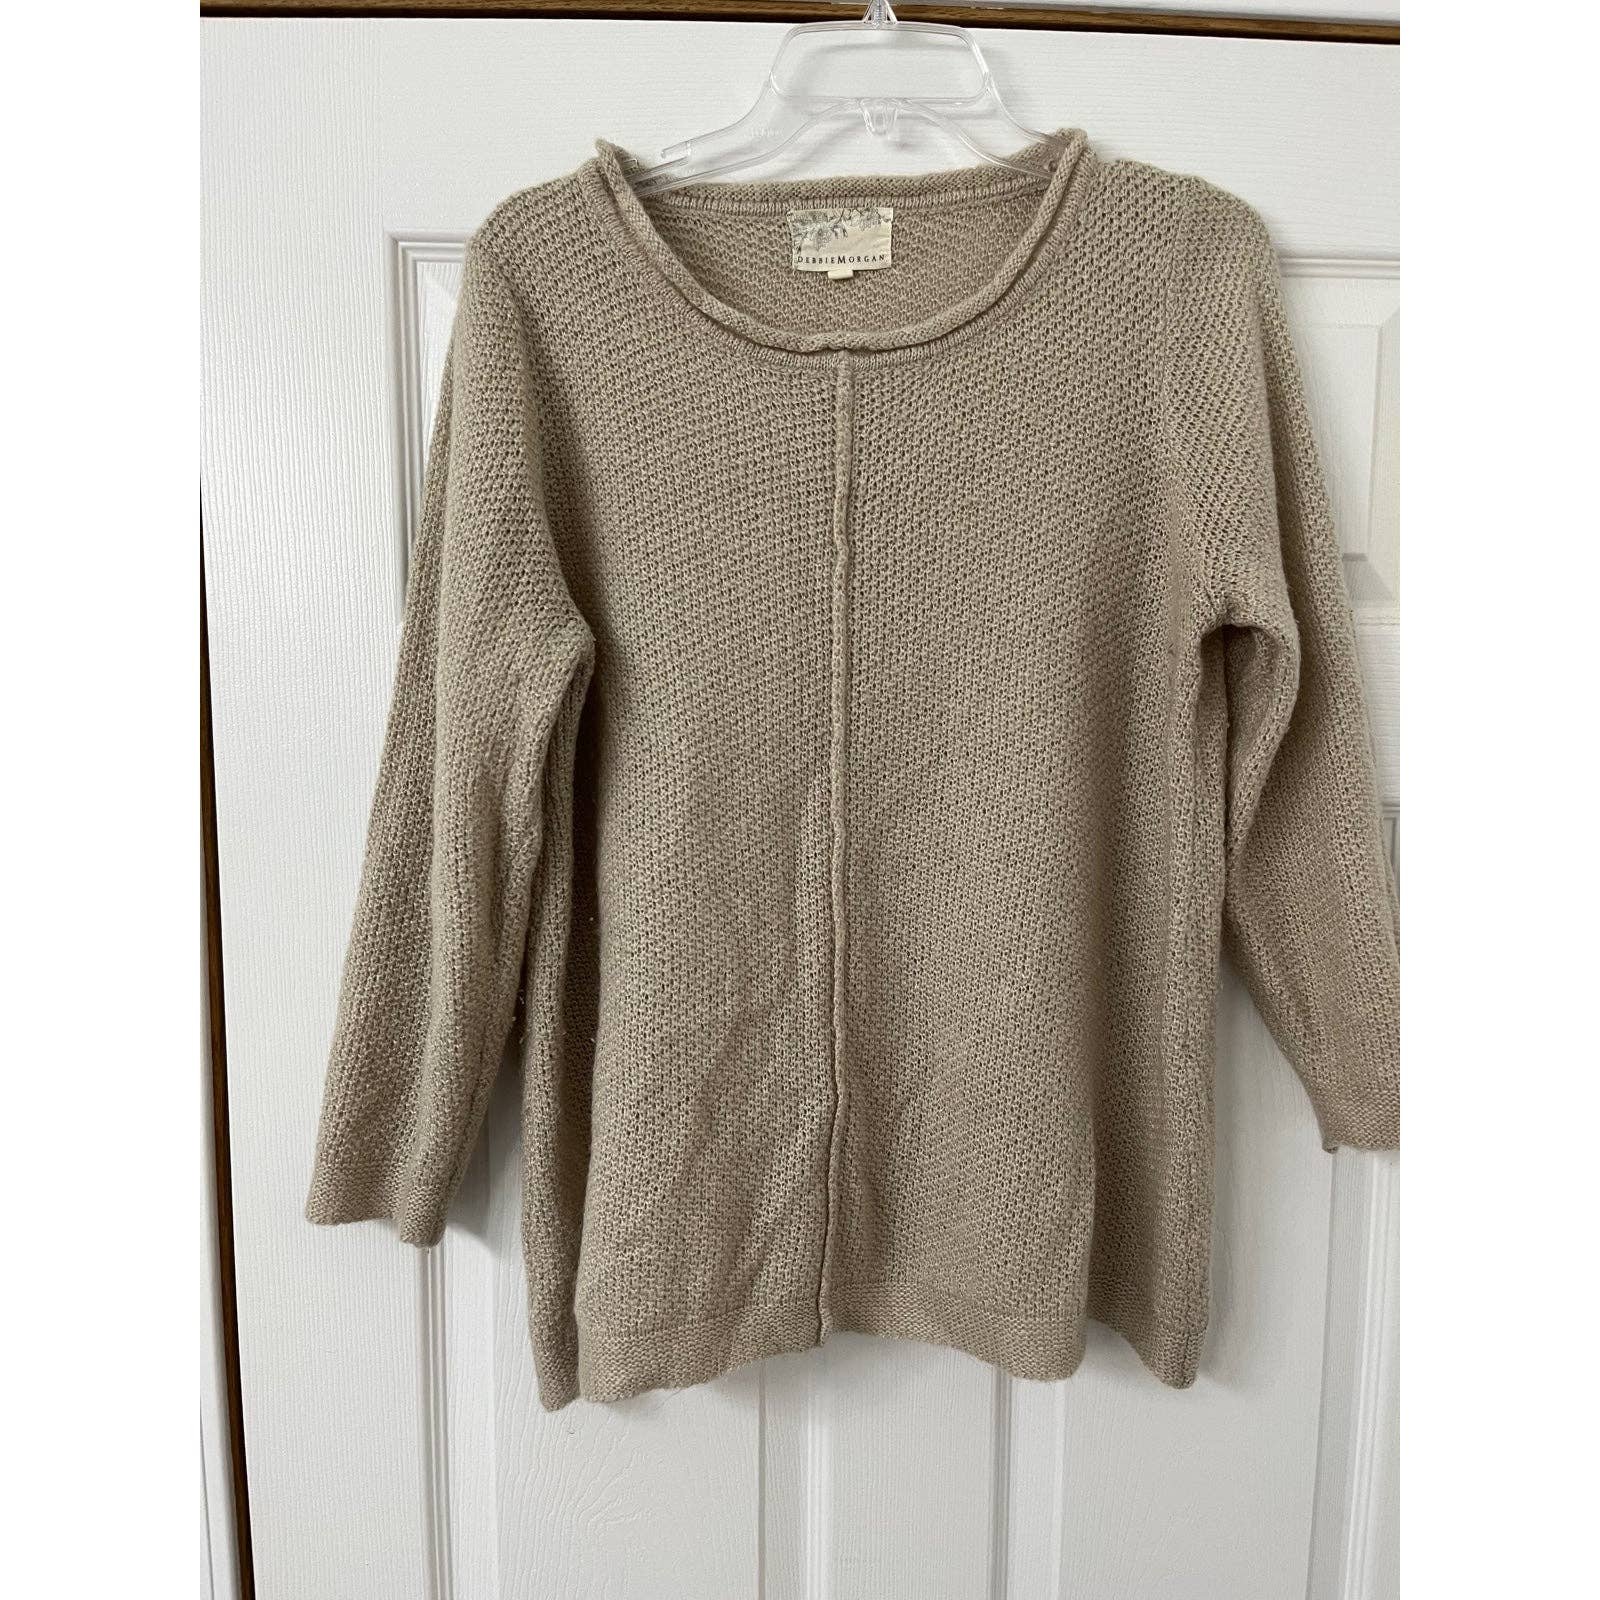 Wholesale price Women’s Debbie Morgan Sweater Size L hxlIj49Ib Discount